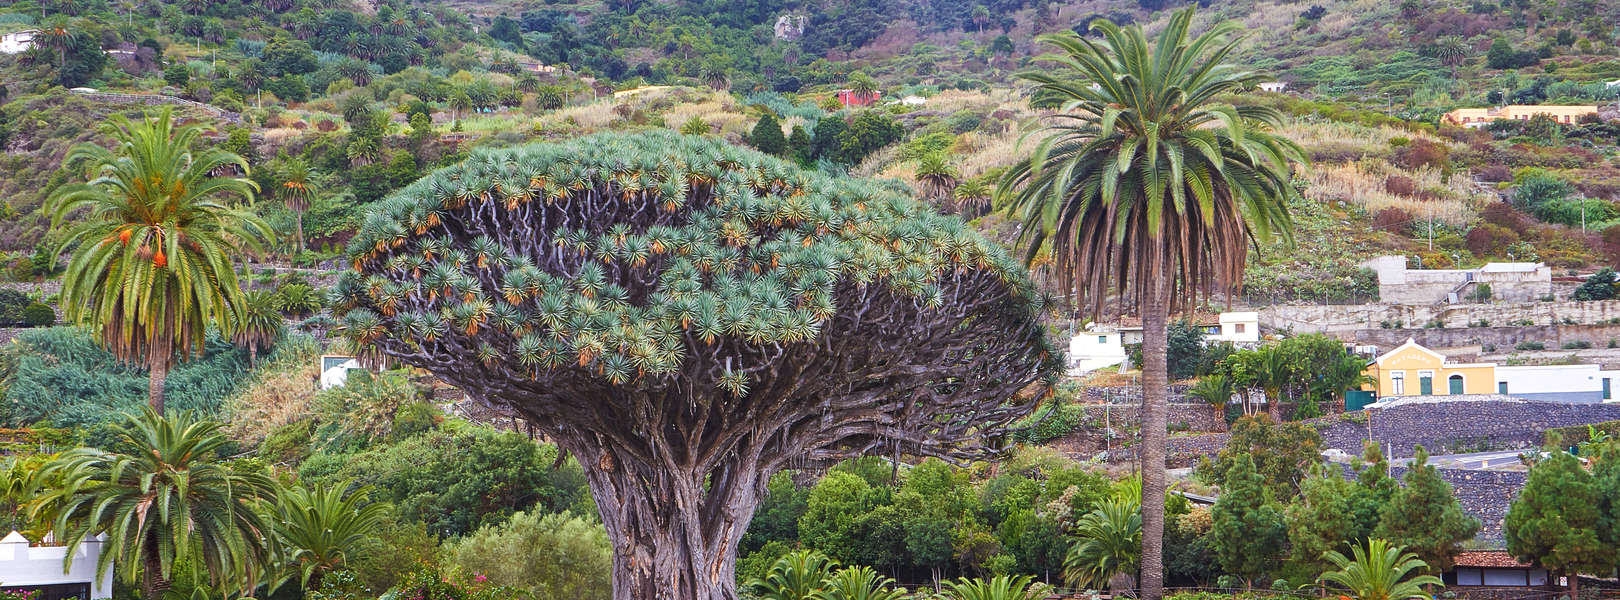 Der berühmte Drachenbaum auf Teneriffa in Icod de los Vinos